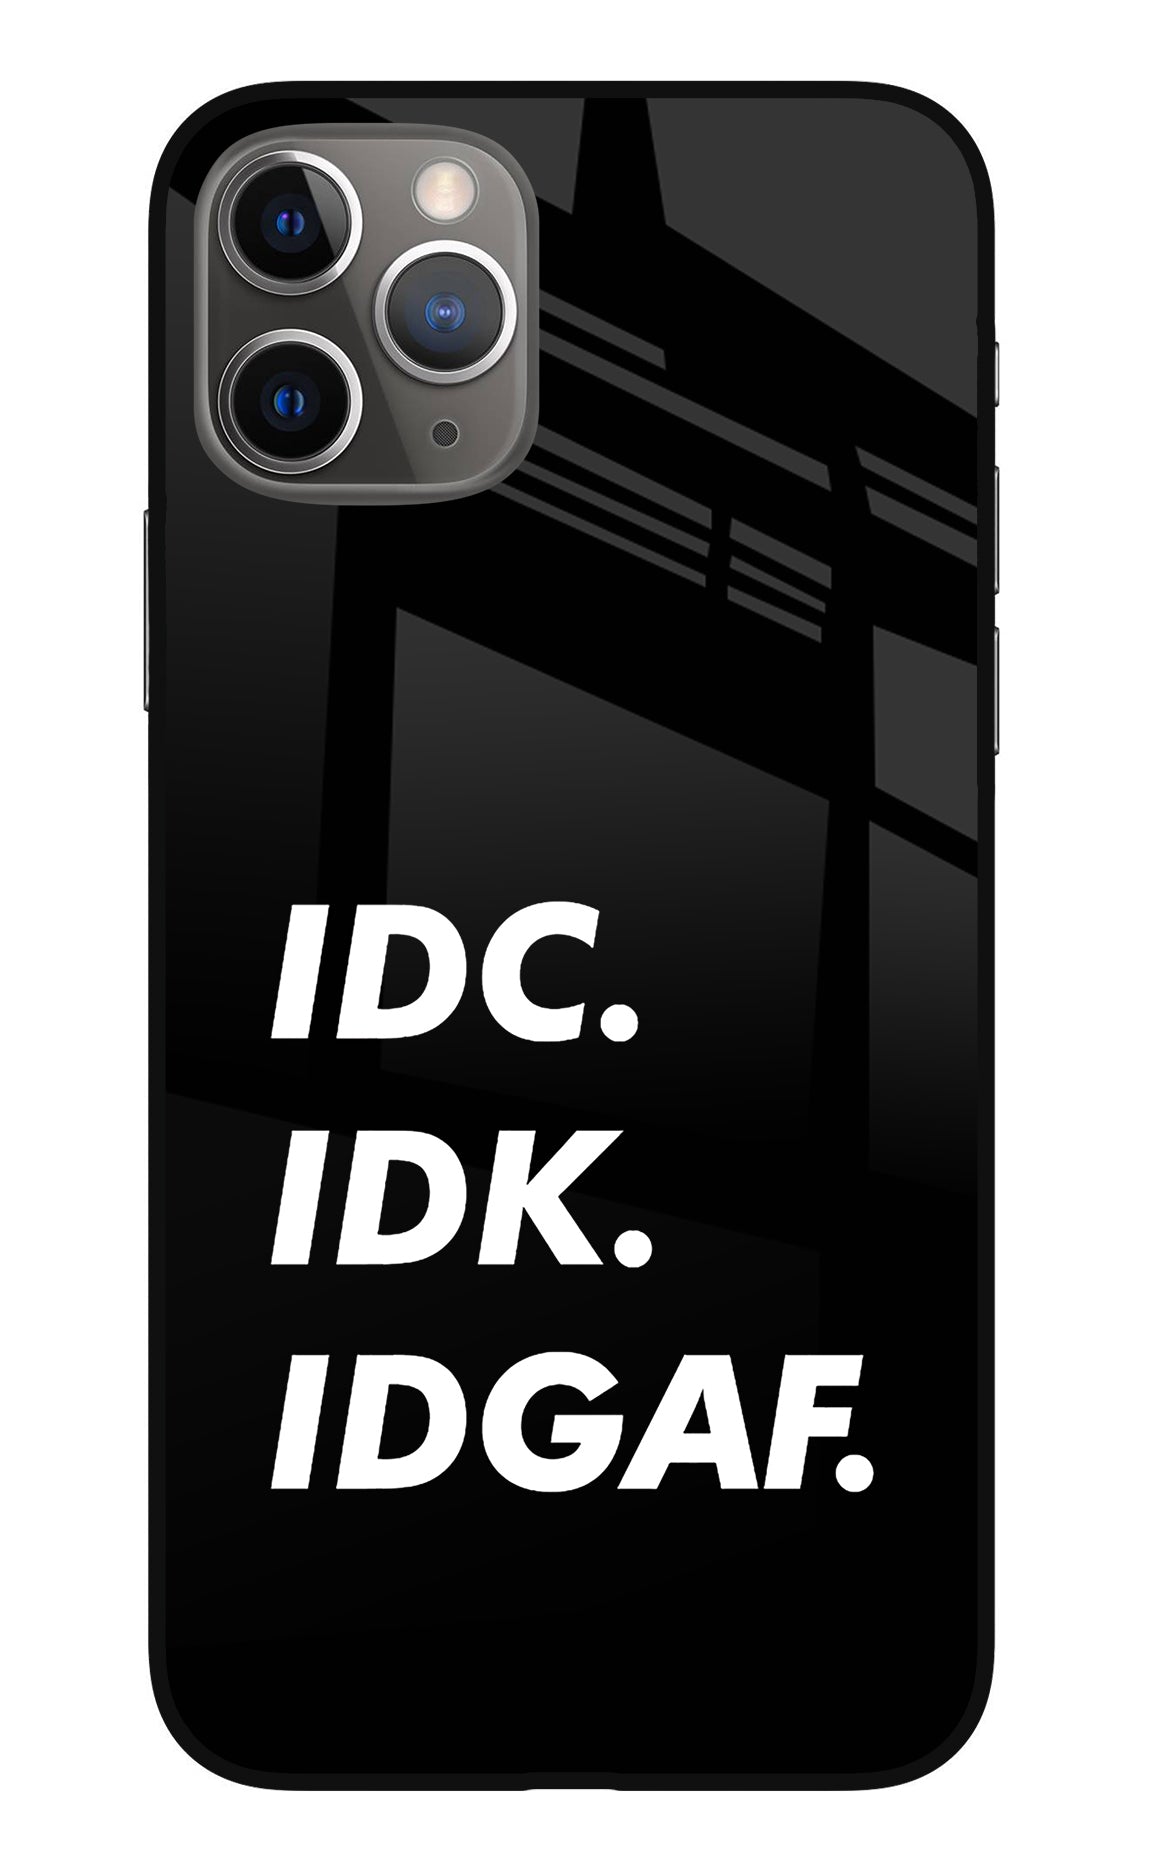 Idc Idk Idgaf iPhone 11 Pro Max Glass Case